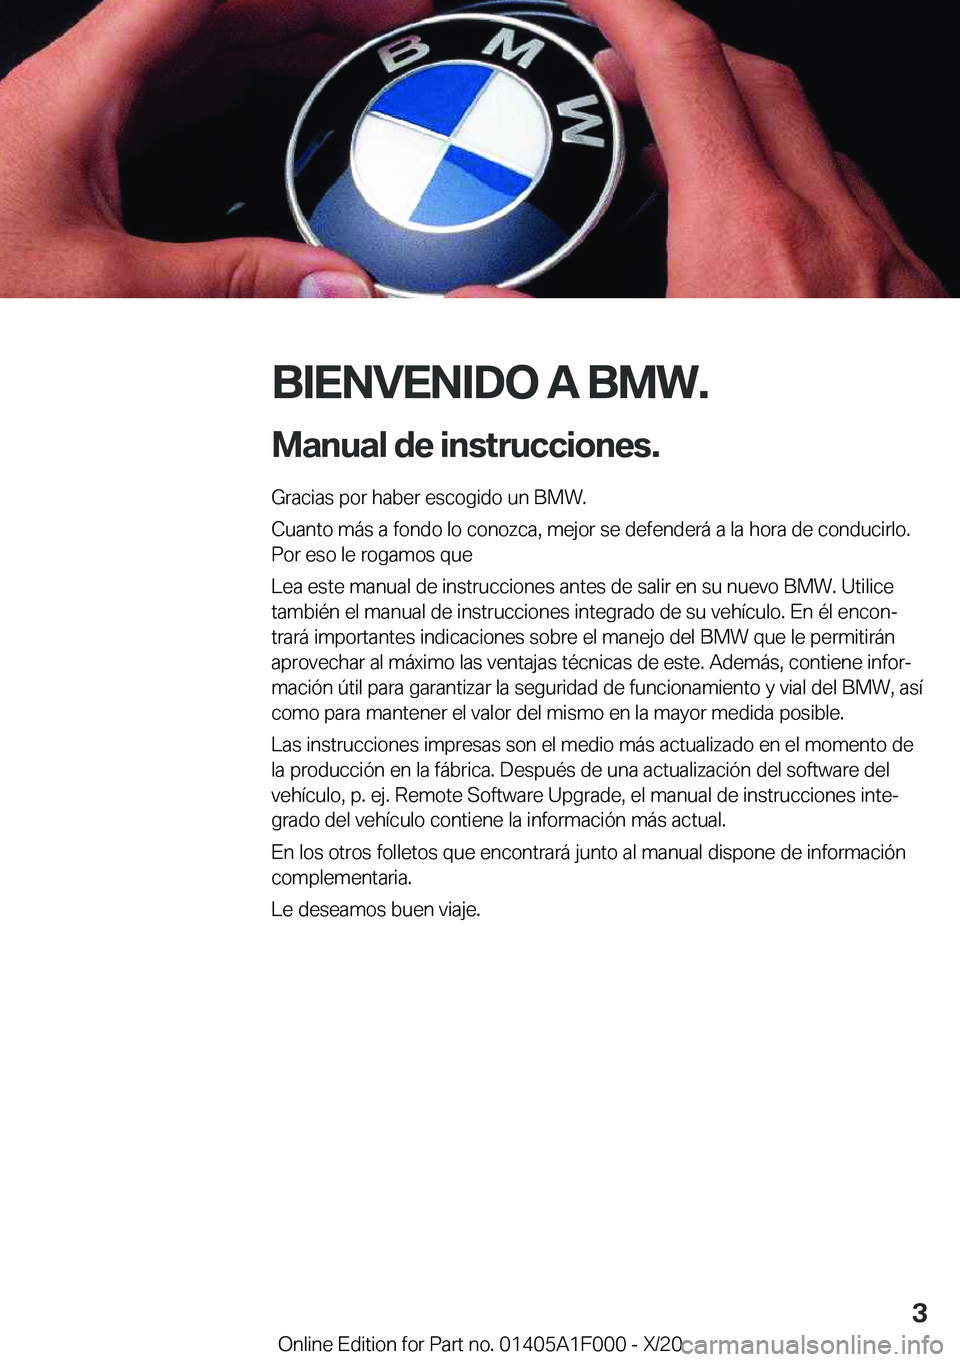 BMW X7 2021  Manuales de Empleo (in Spanish) �B�I�E�N�V�E�N�I�D�O��A��B�M�W�.
�M�a�n�u�a�l��d�e��i�n�s�t�r�u�c�c�i�o�n�e�s�. �G�r�a�c�i�a�s��p�o�r��h�a�b�e�r��e�s�c�o�g�i�d�o��u�n��B�M�W�.
�C�u�a�n�t�o��m�